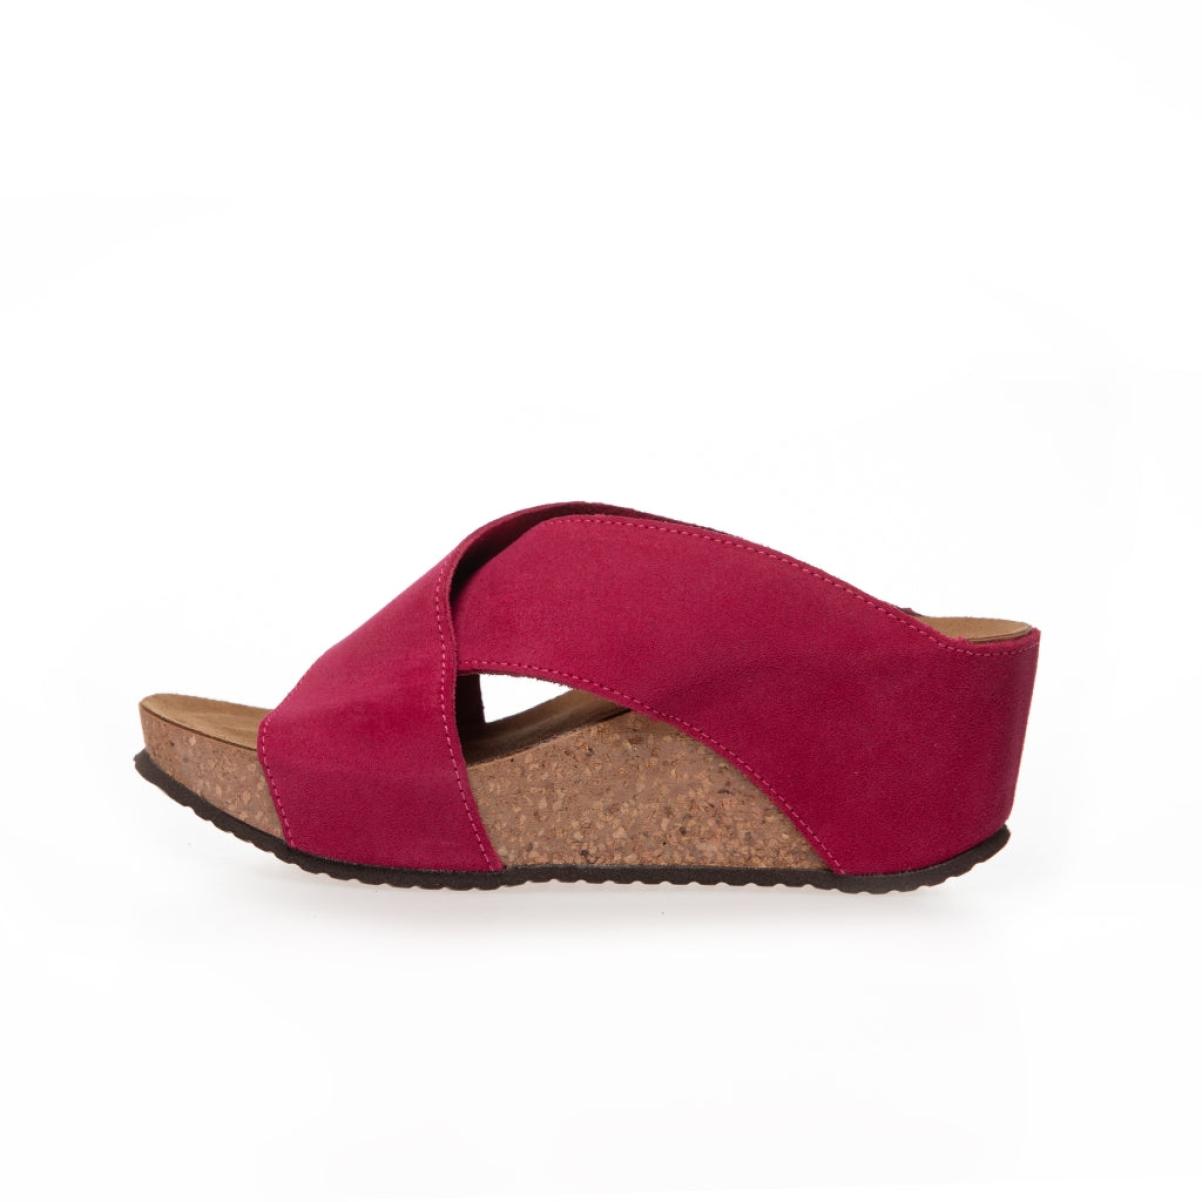 Frances 23 Suede - Pink Purple Sandals Copenhagen Shoes Women Sleek